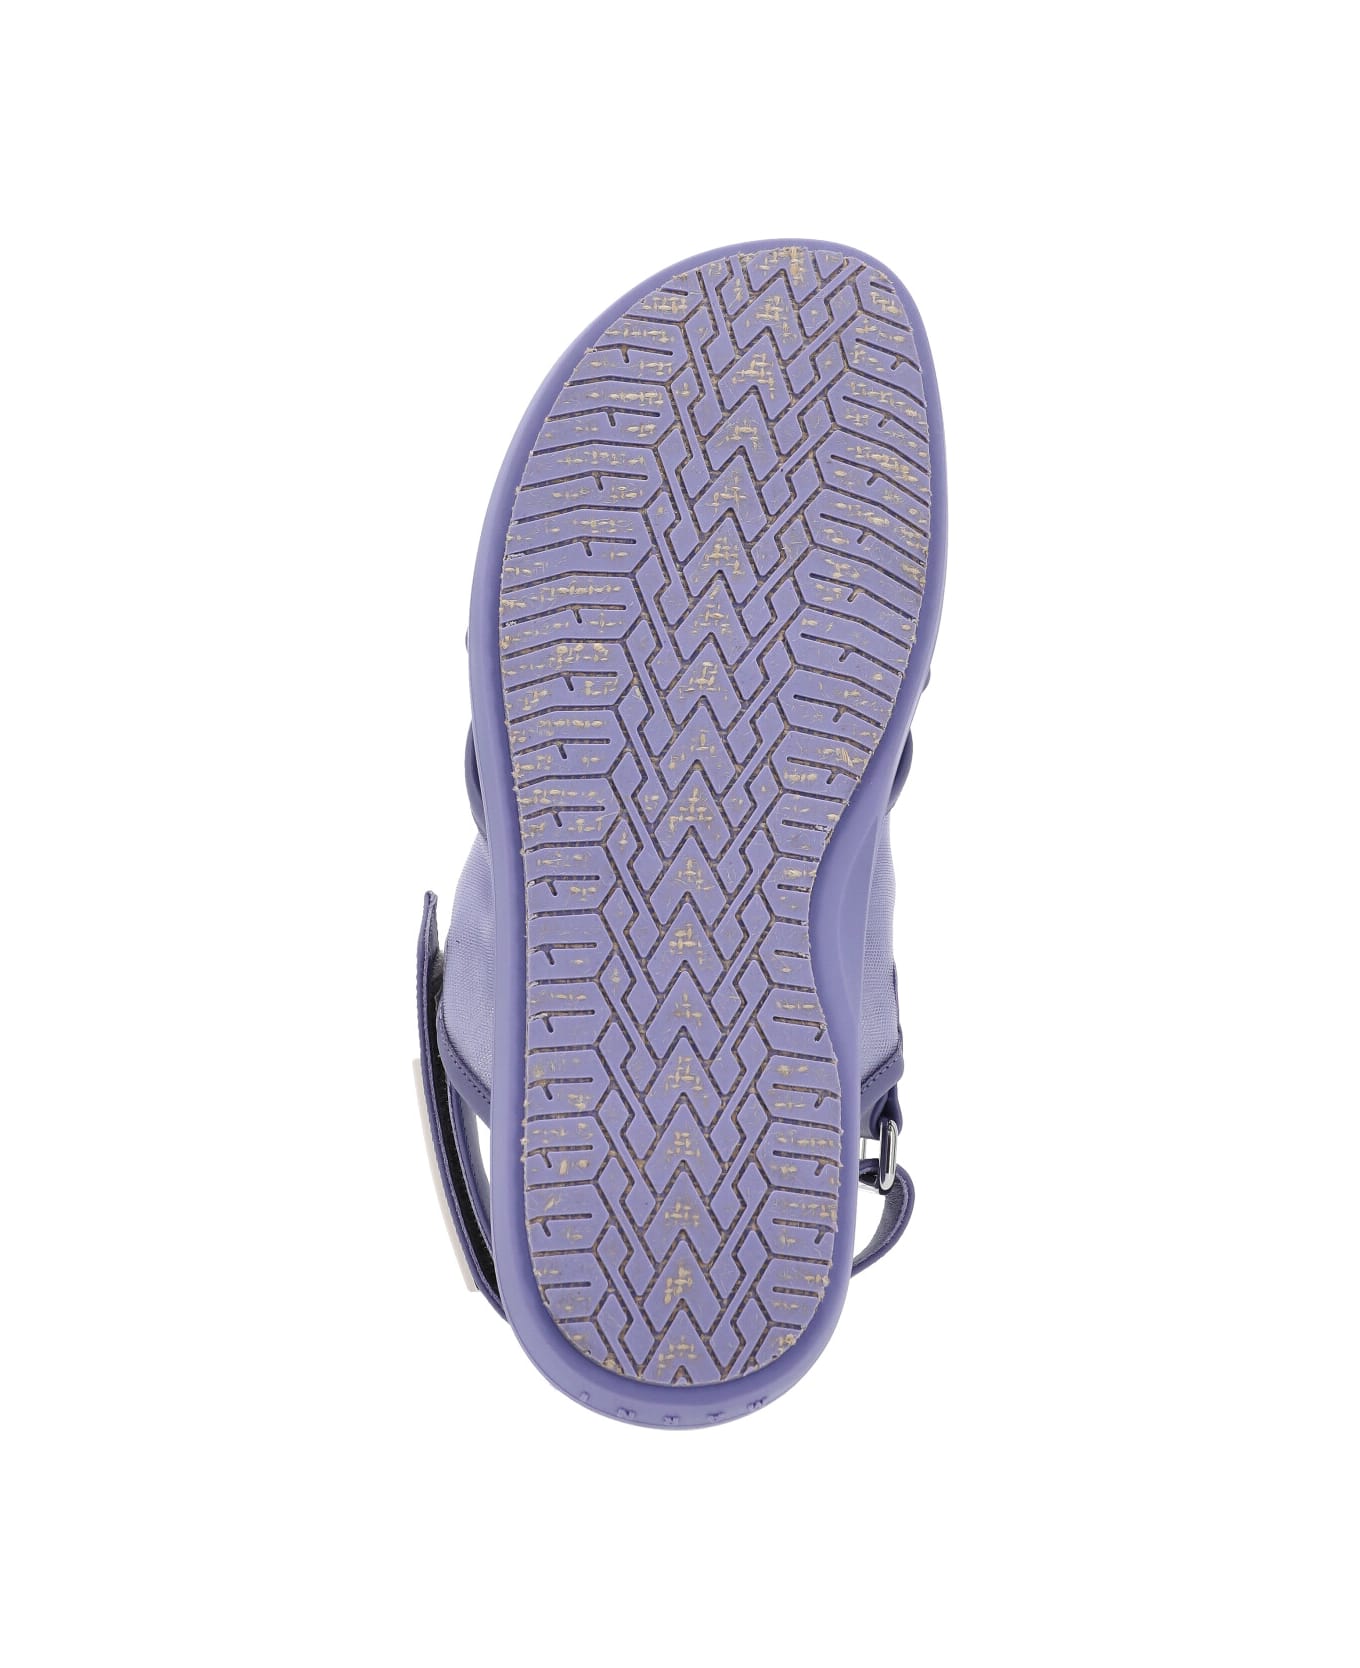 Marni Logoed Sandals - Purple